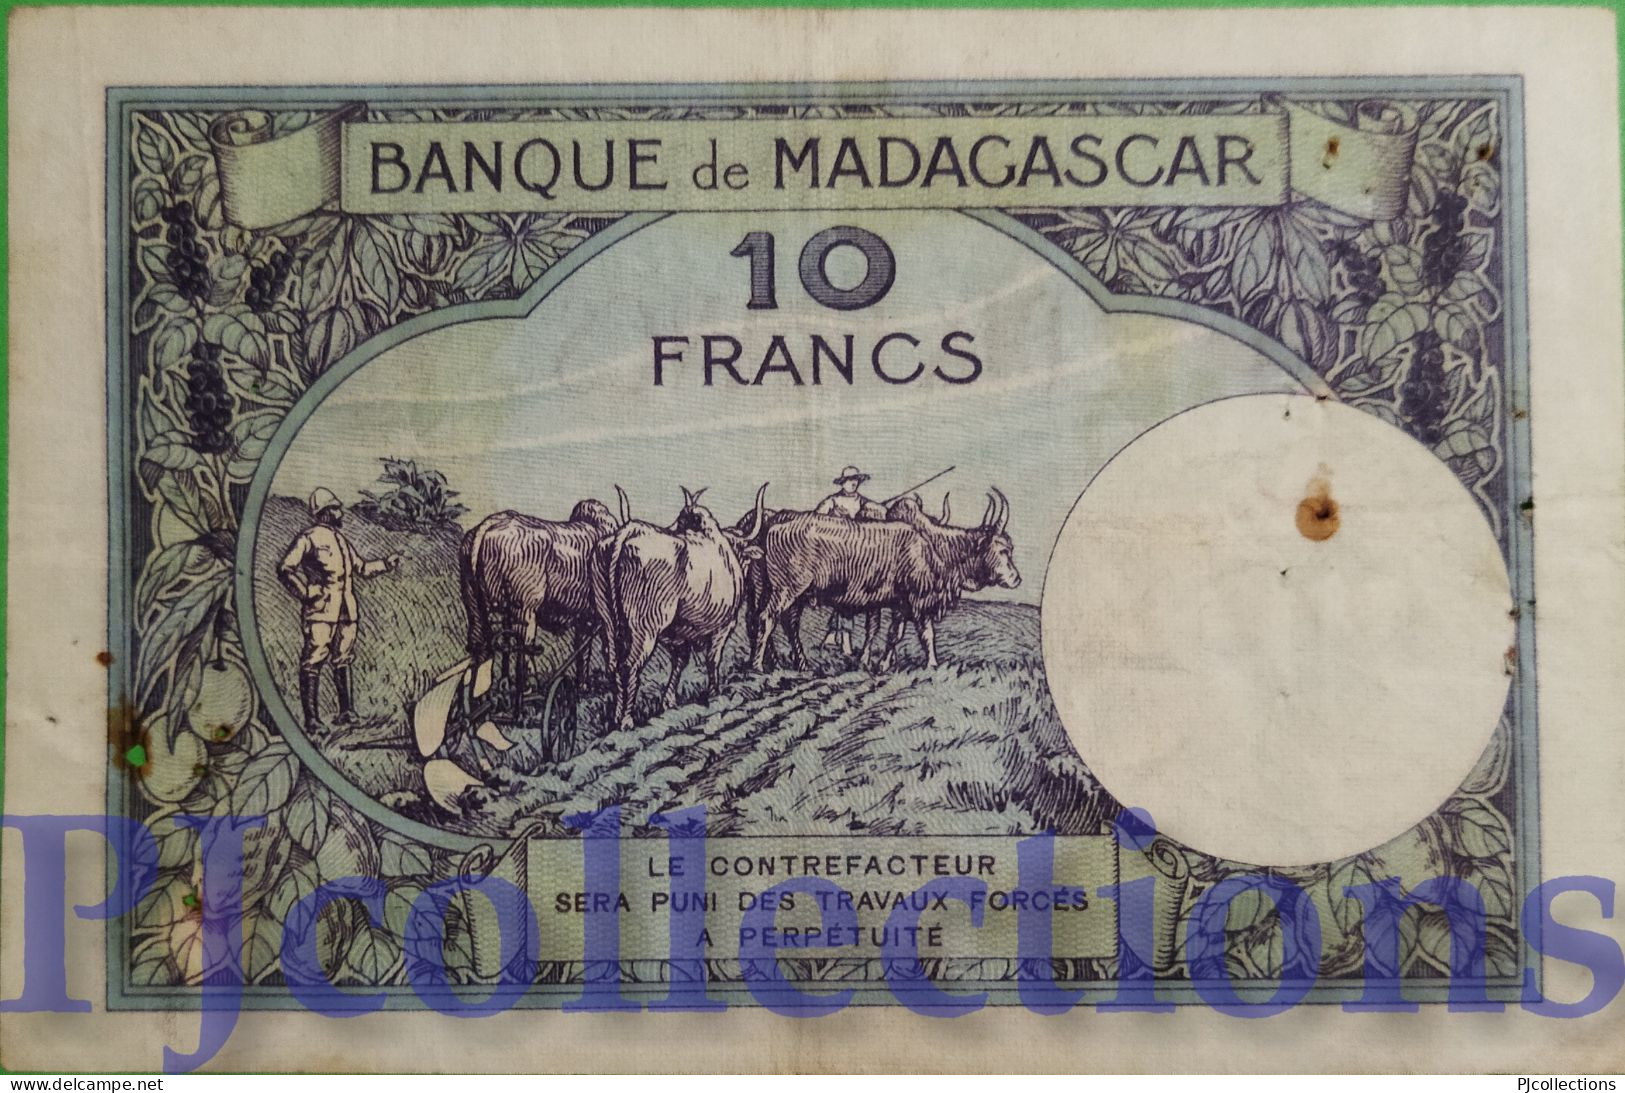 MADAGASCAR 10 FRANCS 1937/47 PICK 36 VF W/PIN HOLES - Madagaskar